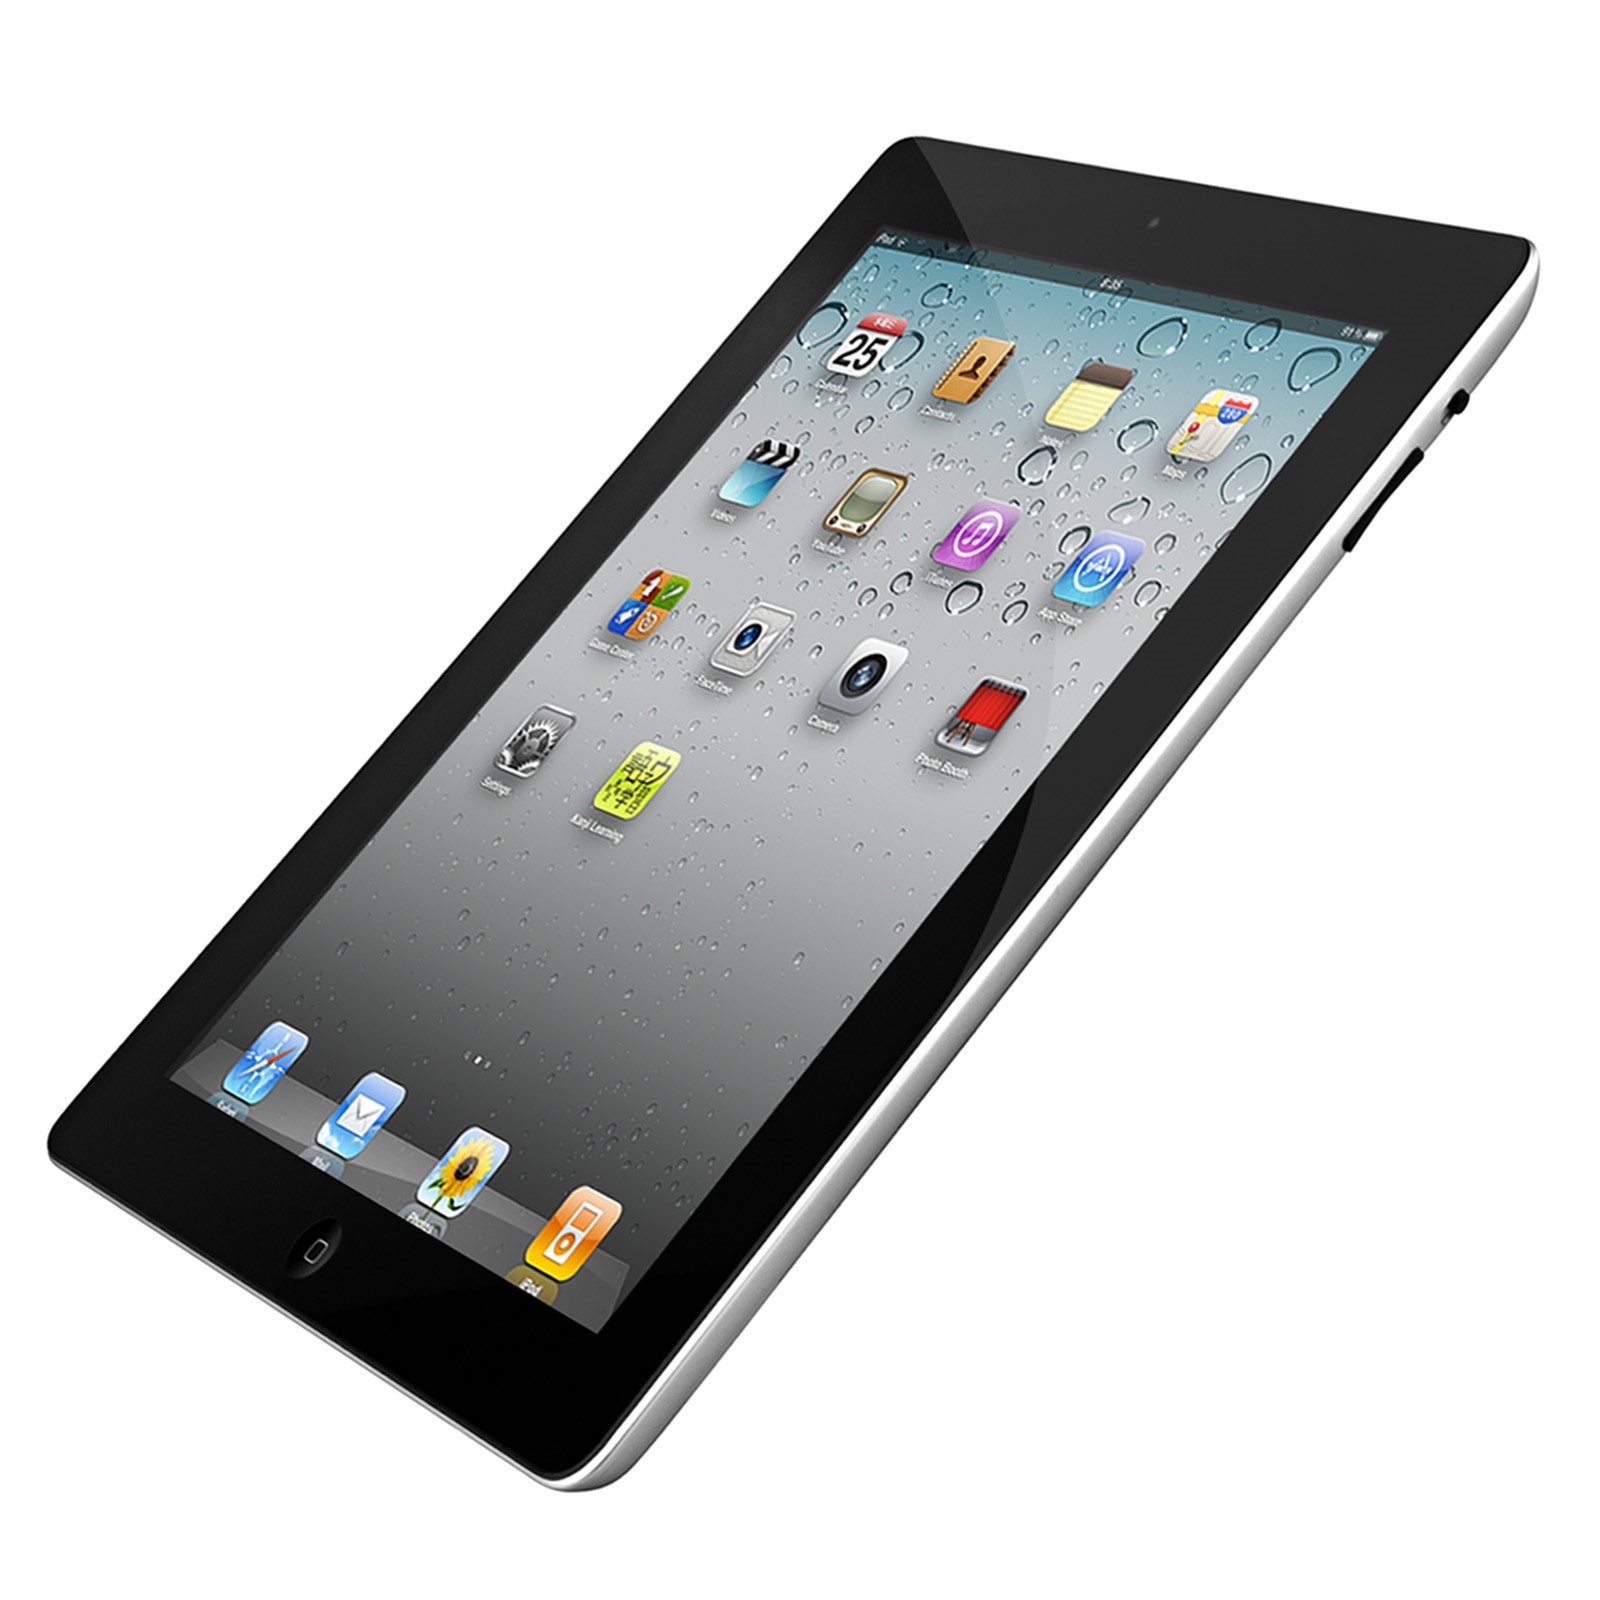 Restored Apple iPad 2 Tablet 16GB - Black (Refurbished) - image 2 of 2